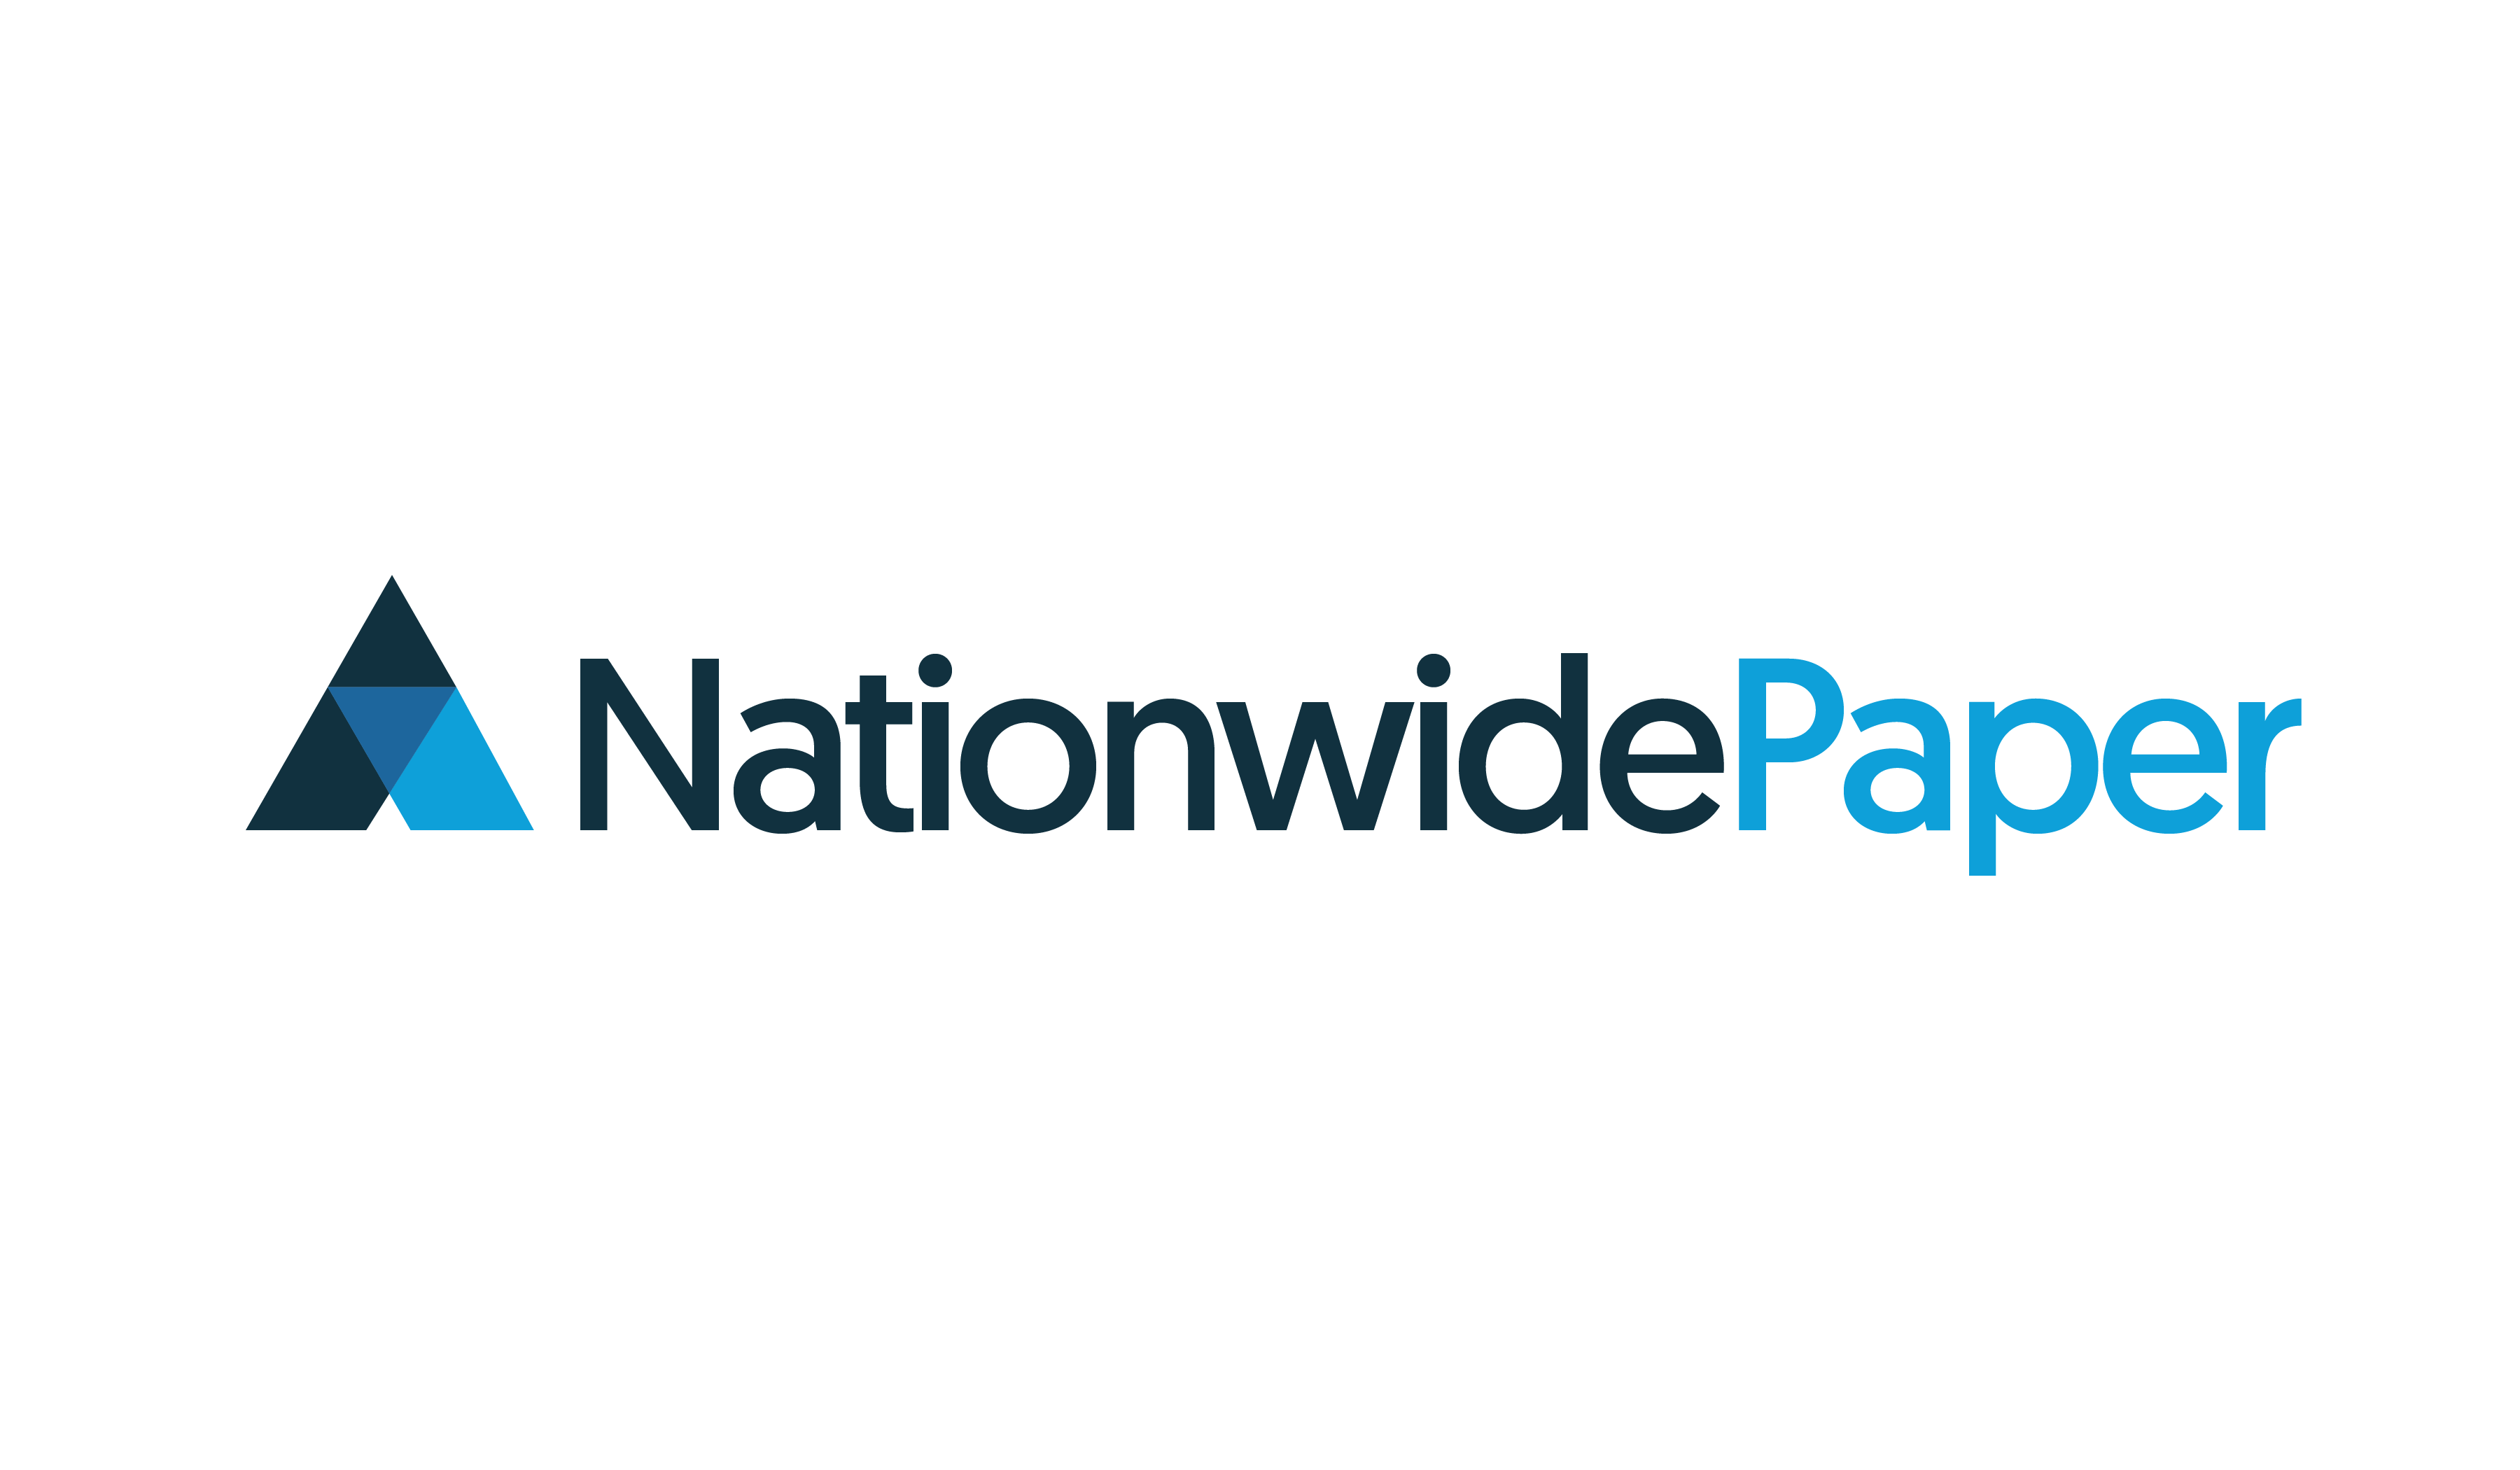 Nationwide Paper Ltd